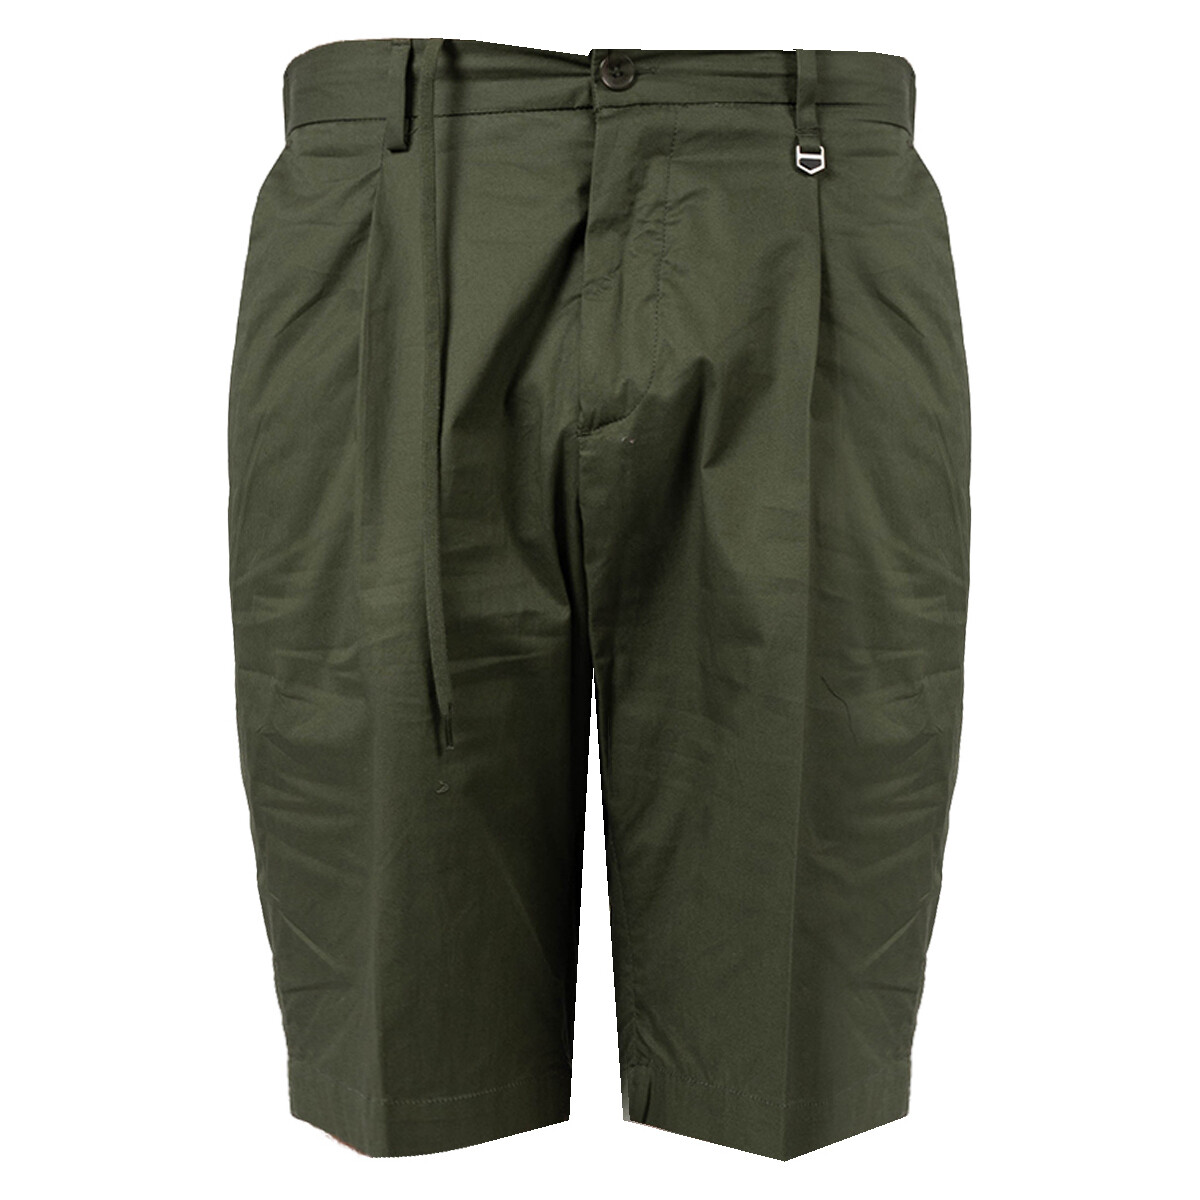 Kleidung Herren Shorts / Bermudas Antony Morato MMSH00177-FA900125 | Gustaf Grün